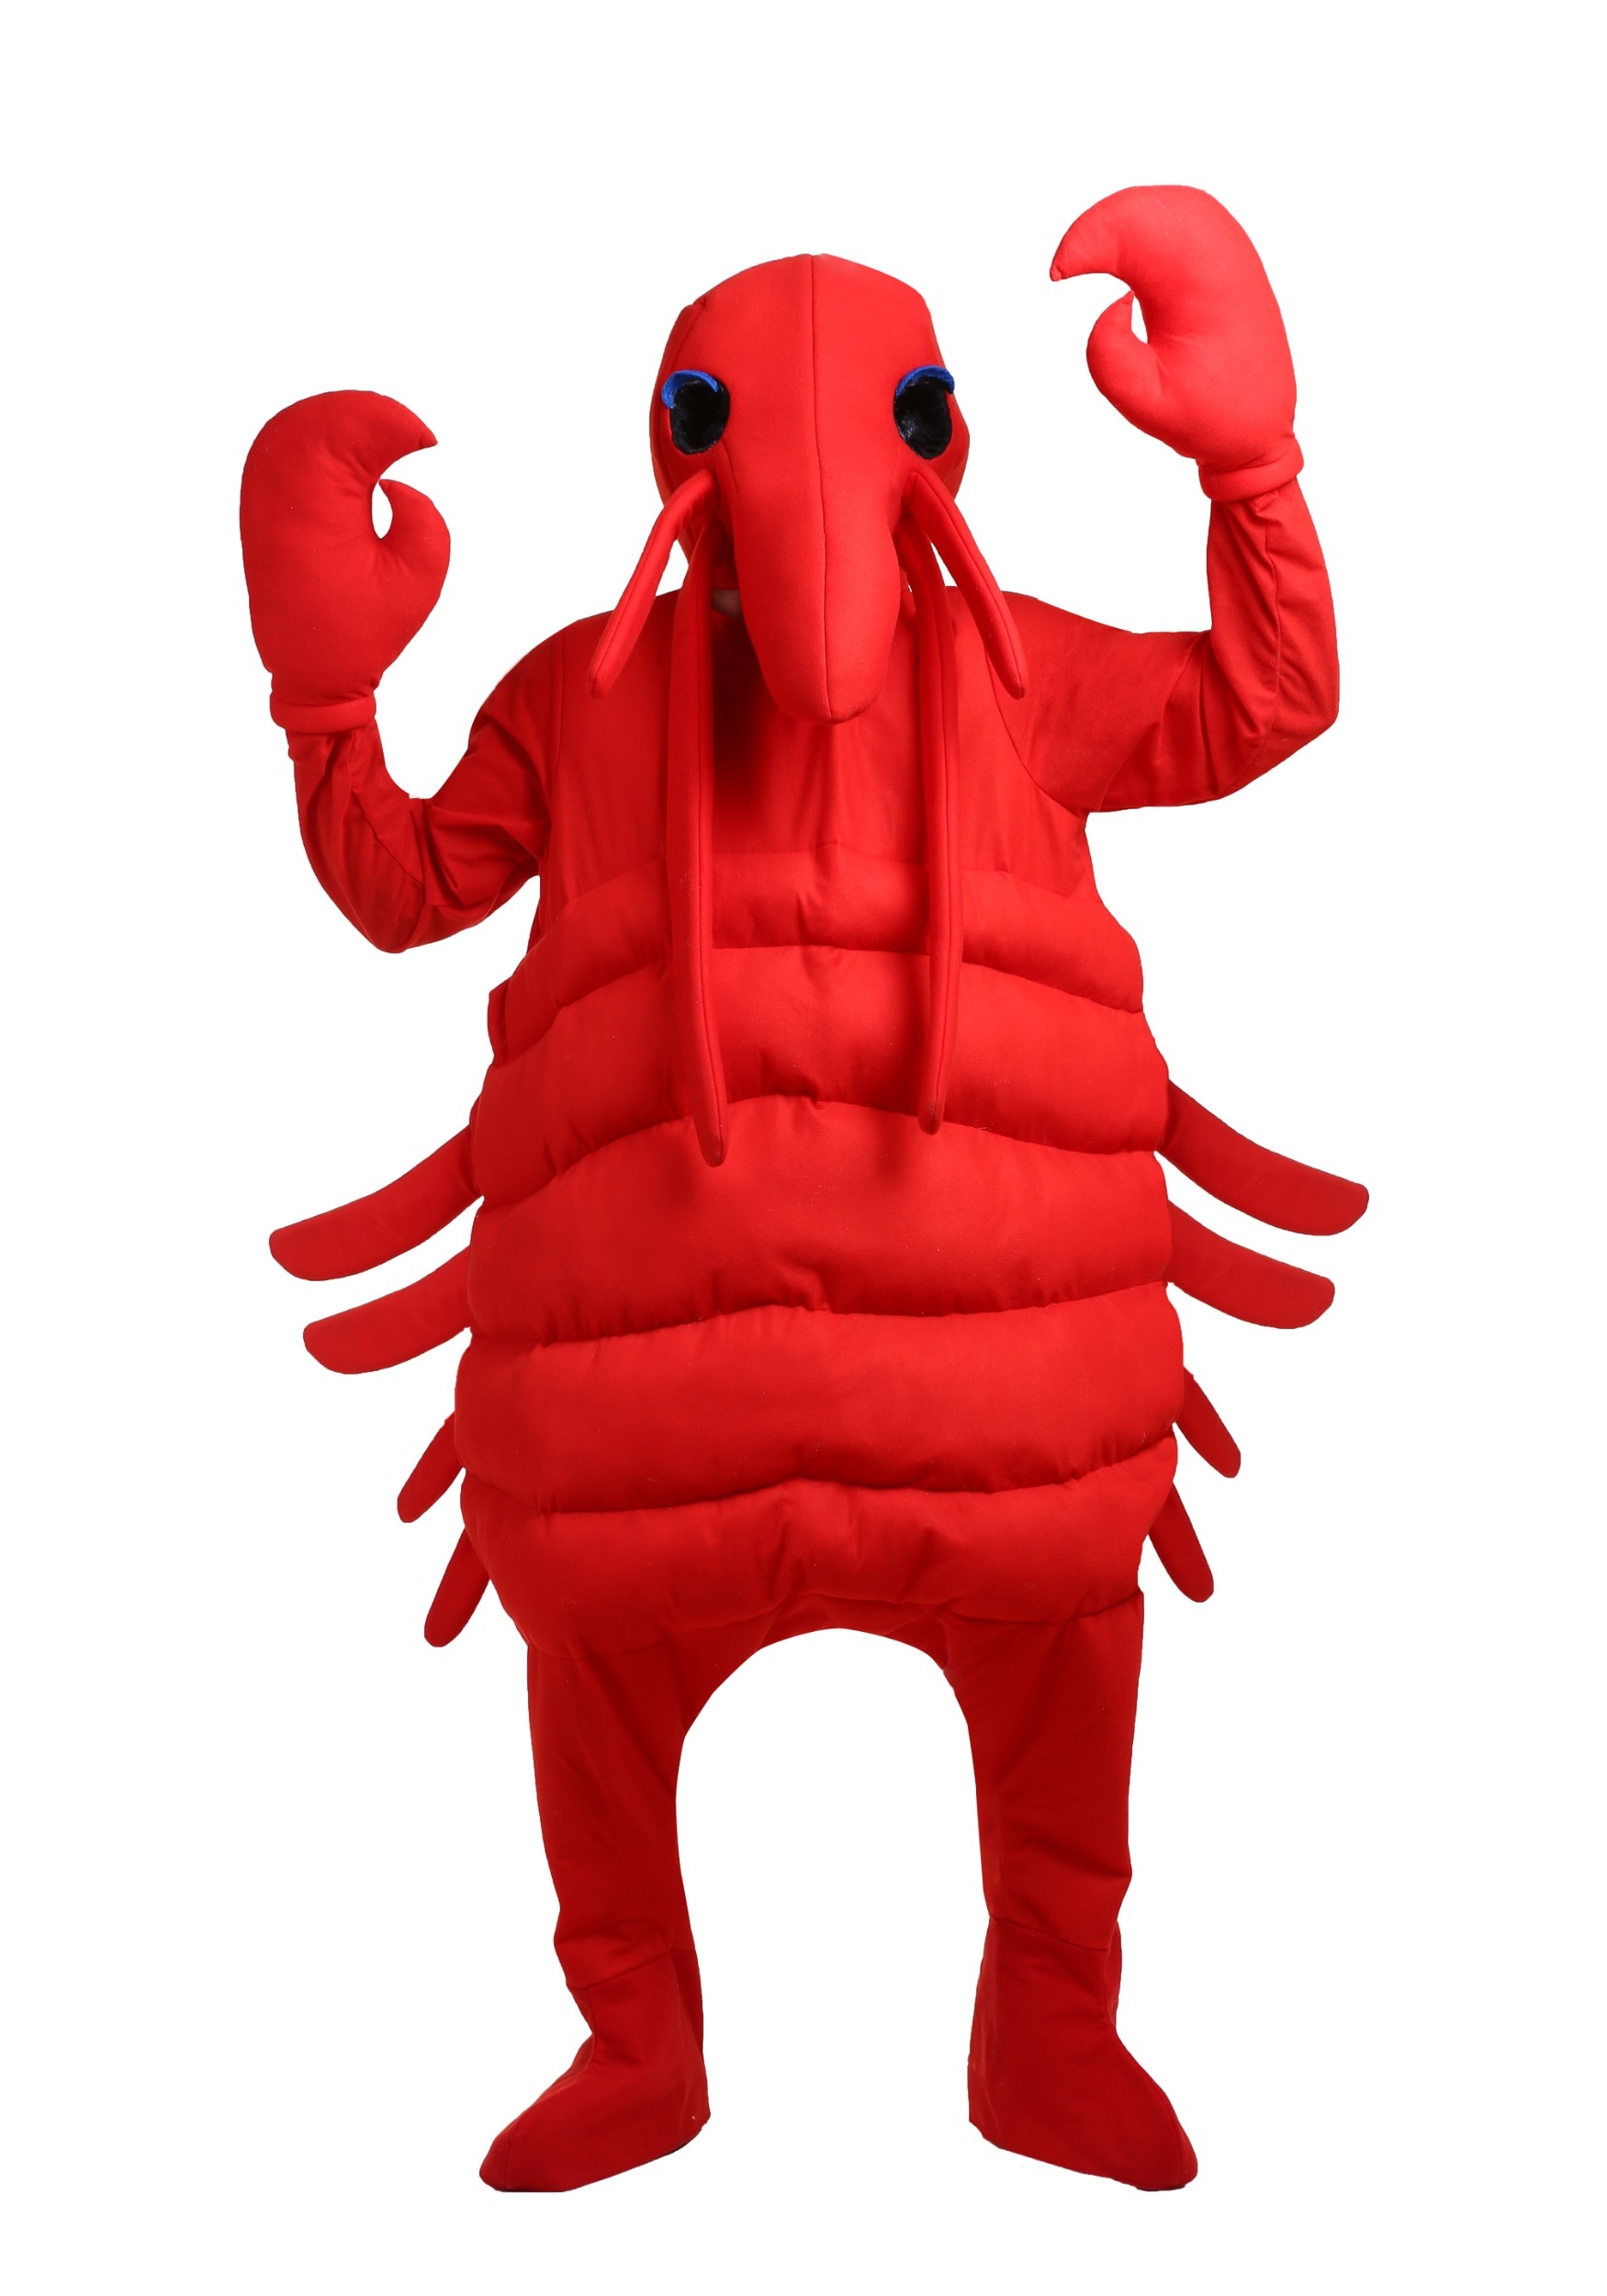 The Lobster Men’s Costume